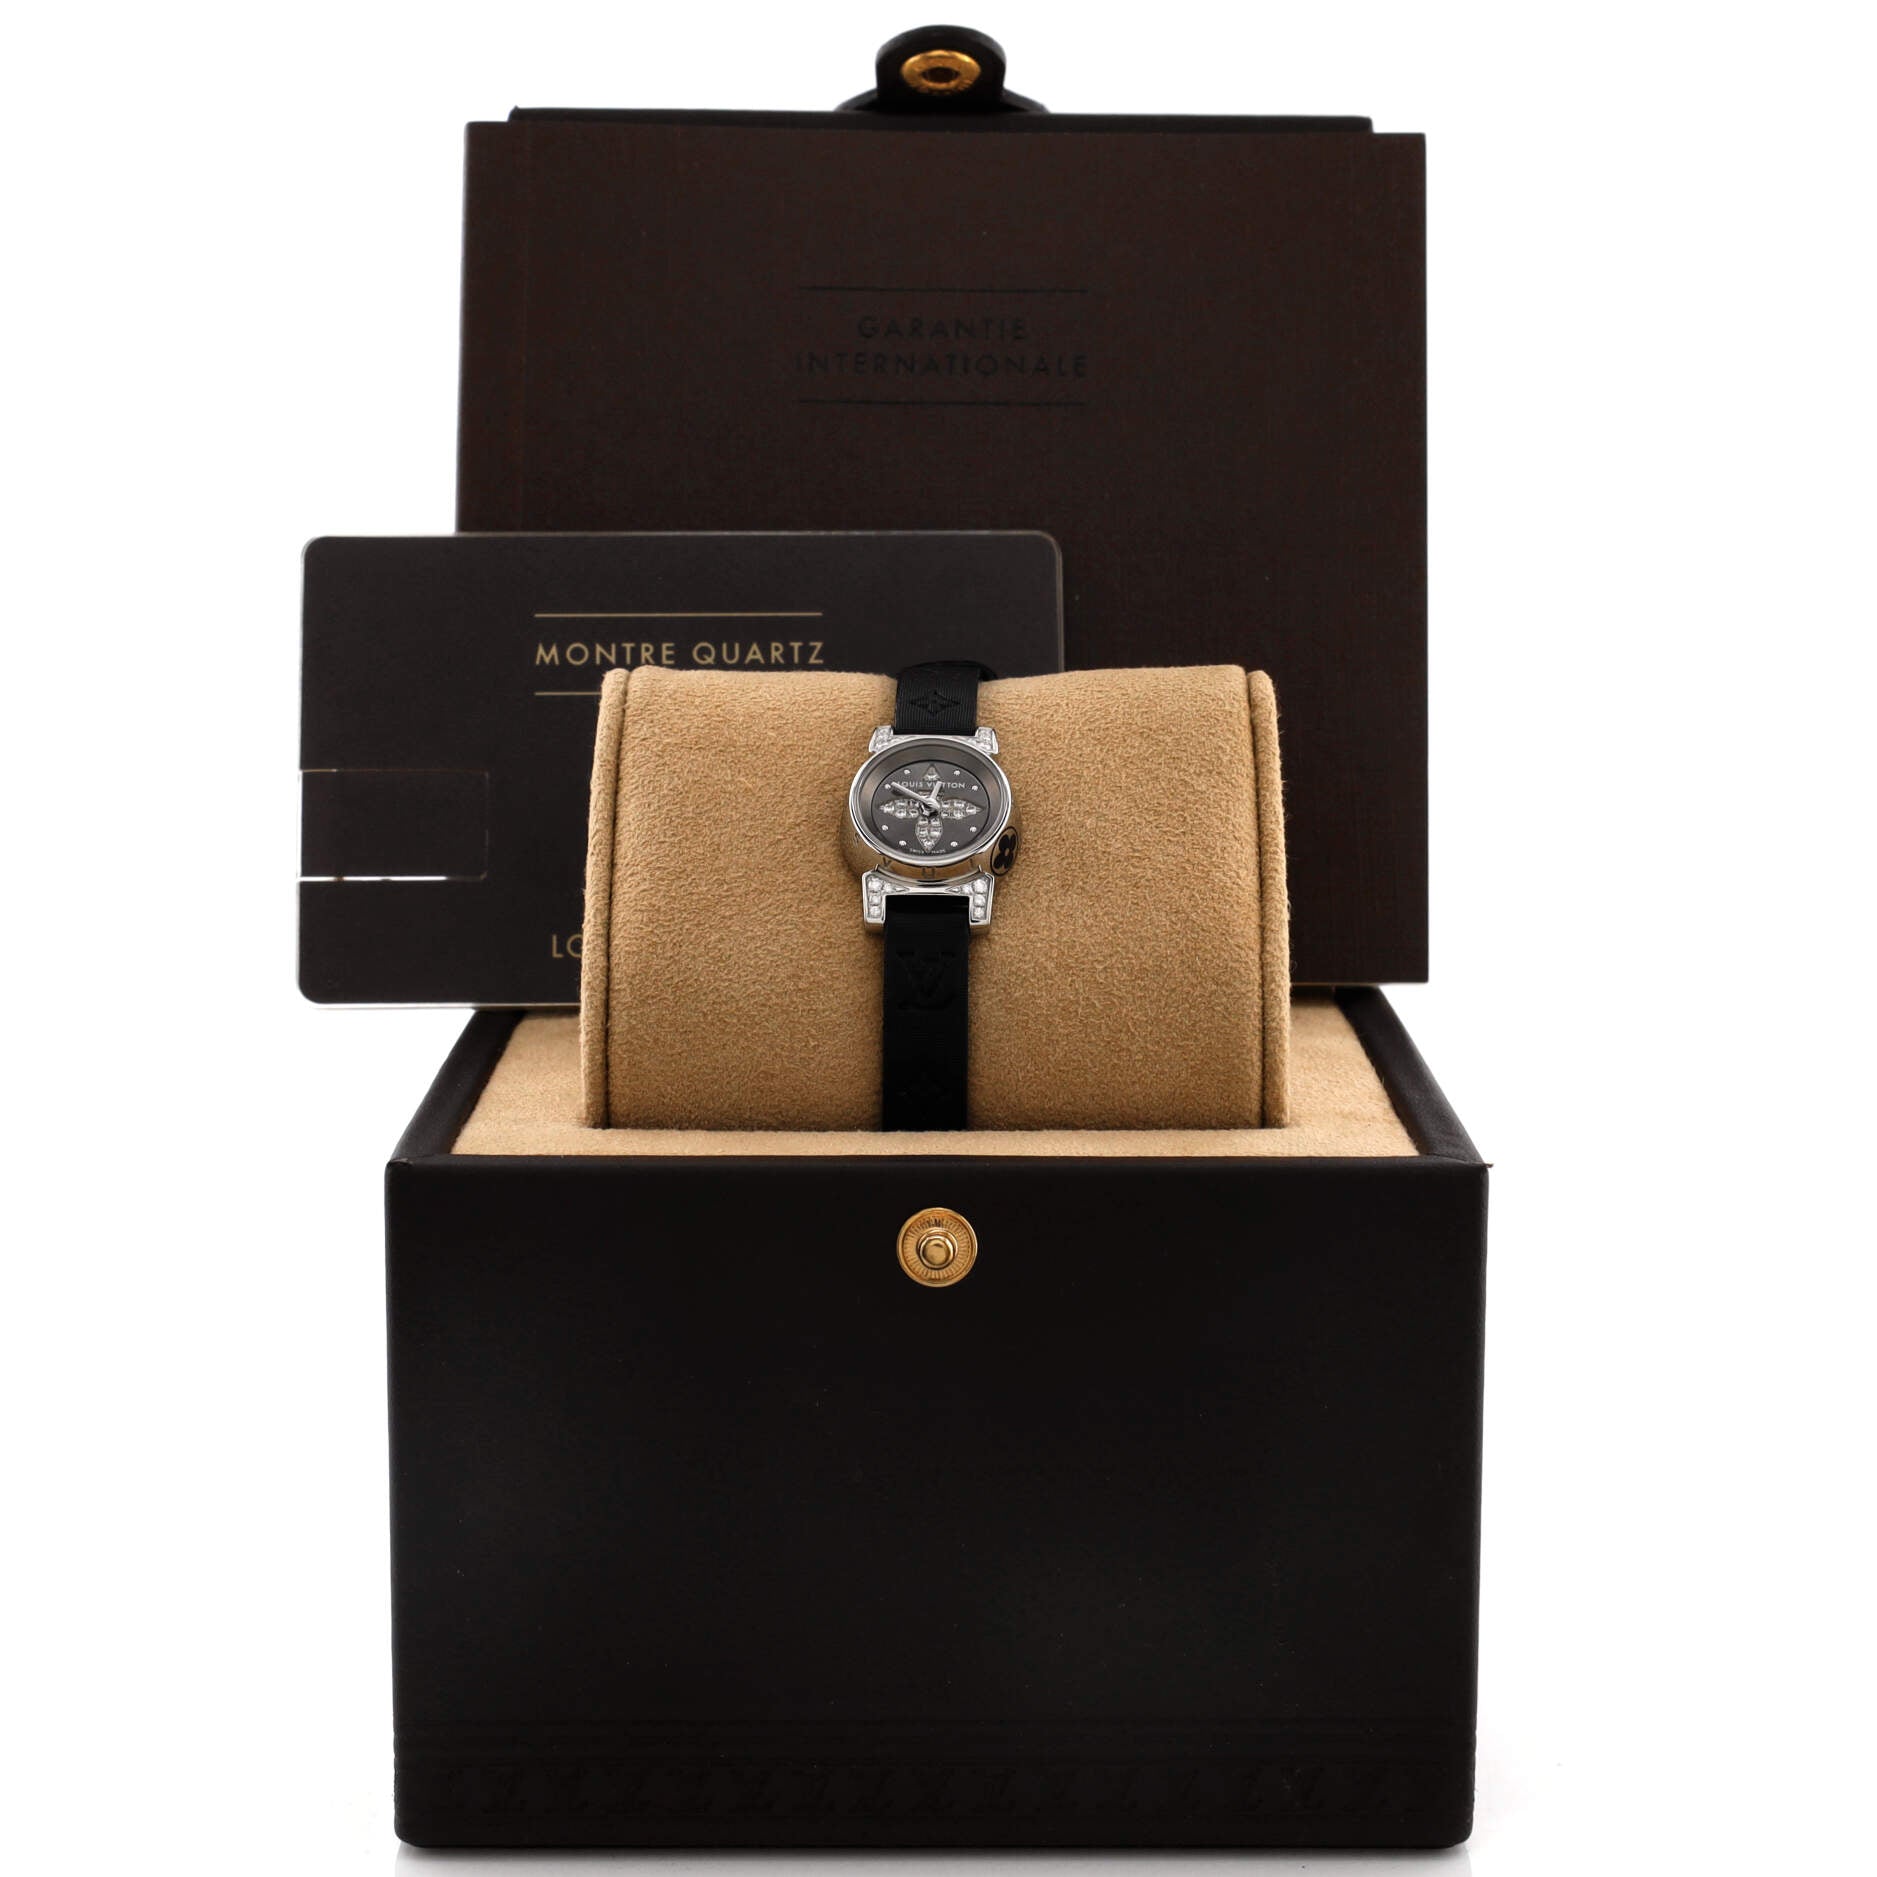 Tambour Slim Monogram, Quartz, 28mm, Stainless Steel - Watches